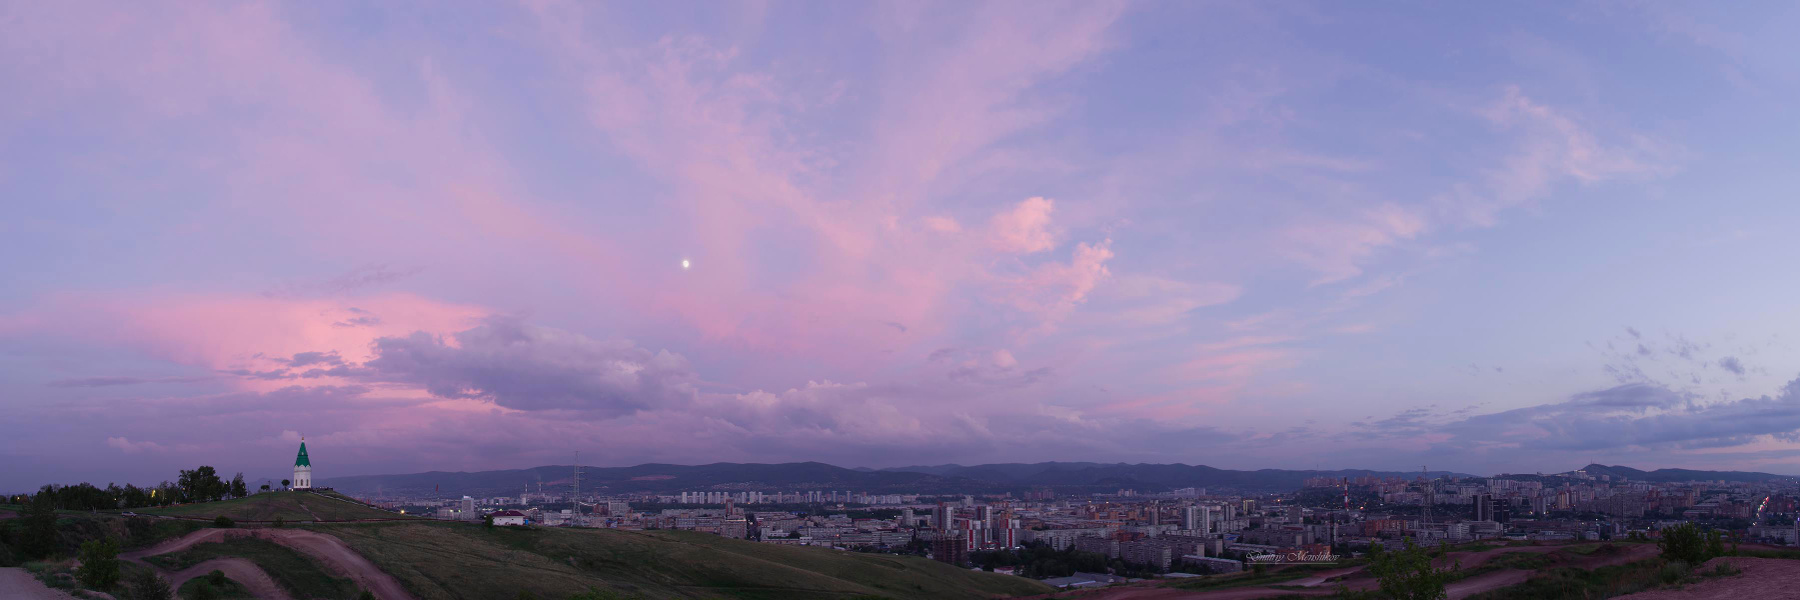 Закат над городом город Красноярск Сибирь лето вечер огни прогулка часовня закат облака